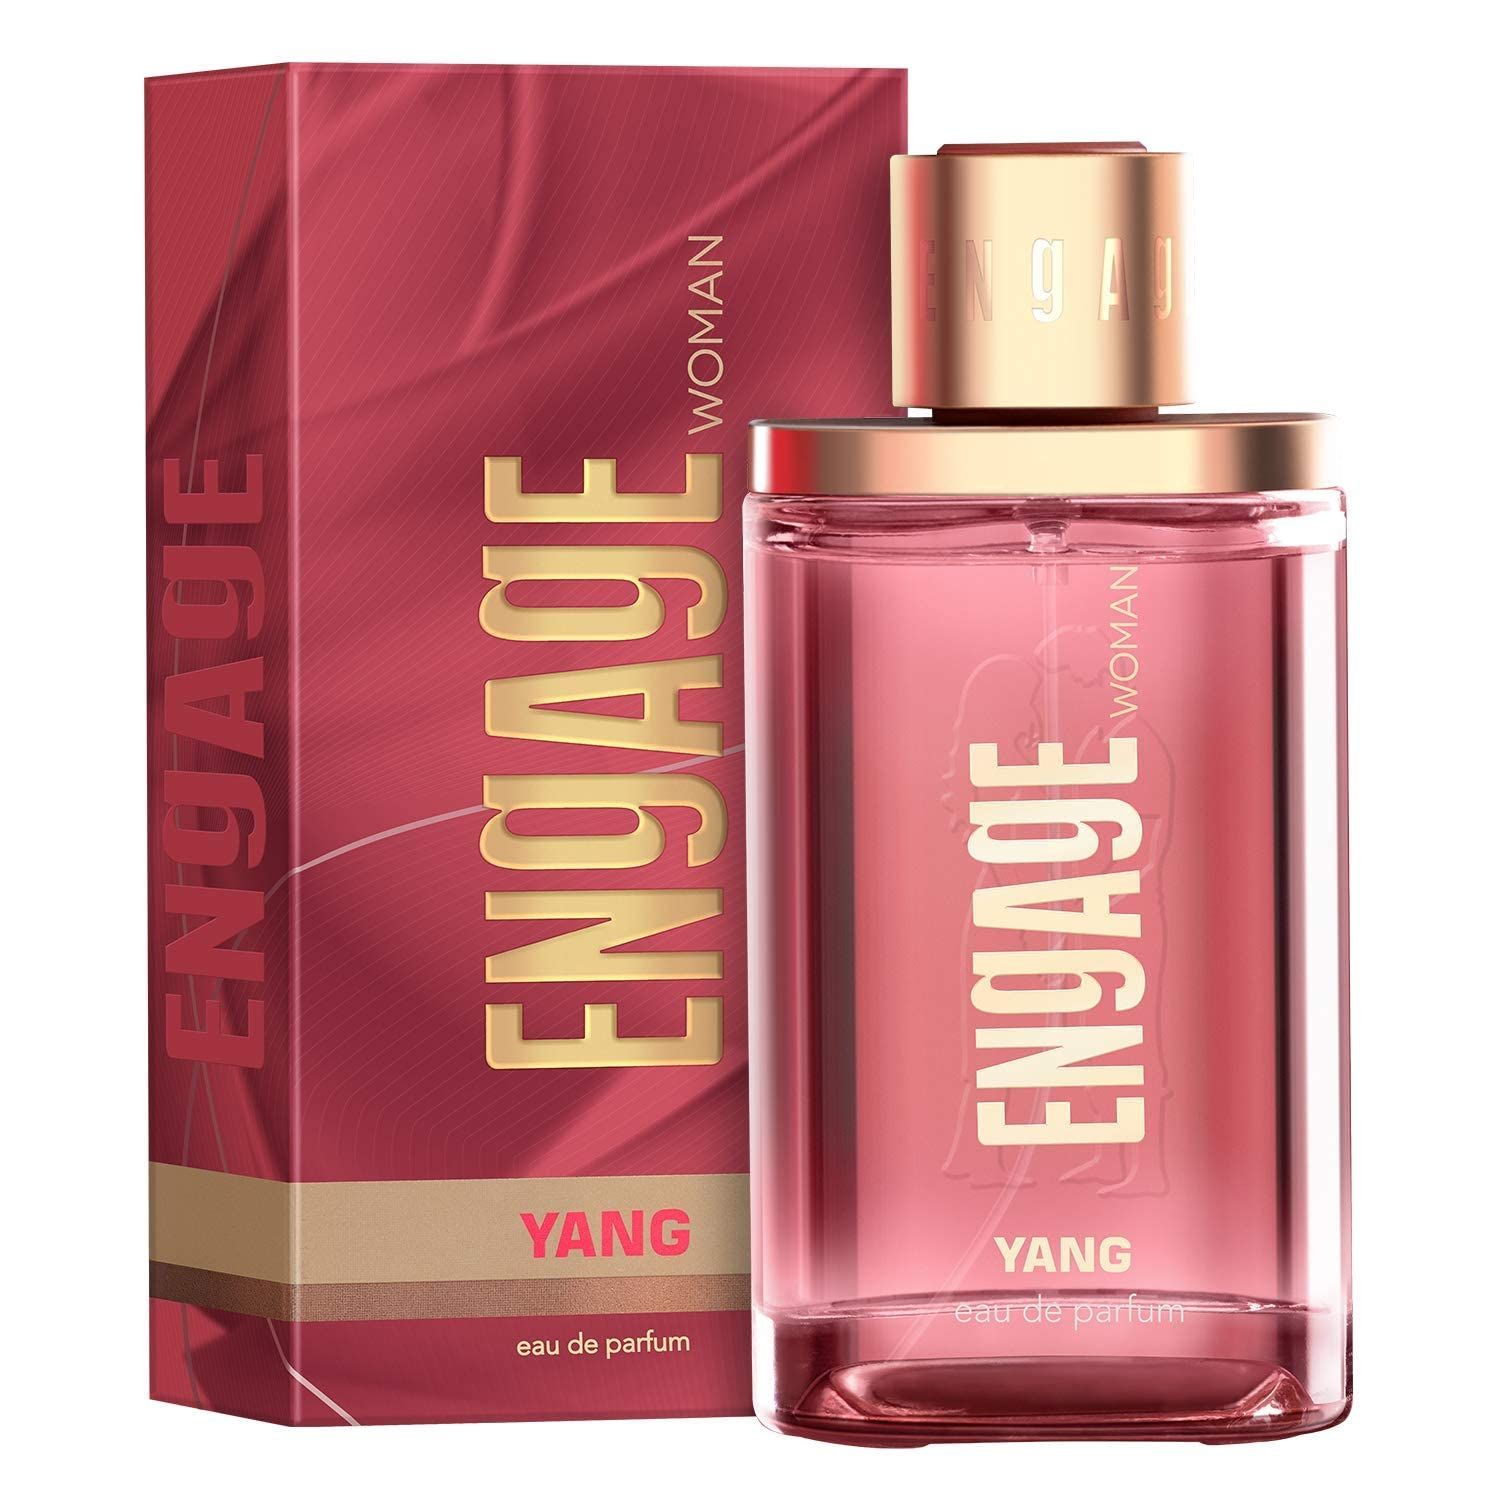 Engage Yang Eau De Parfum, Perfume for Women, 90ml